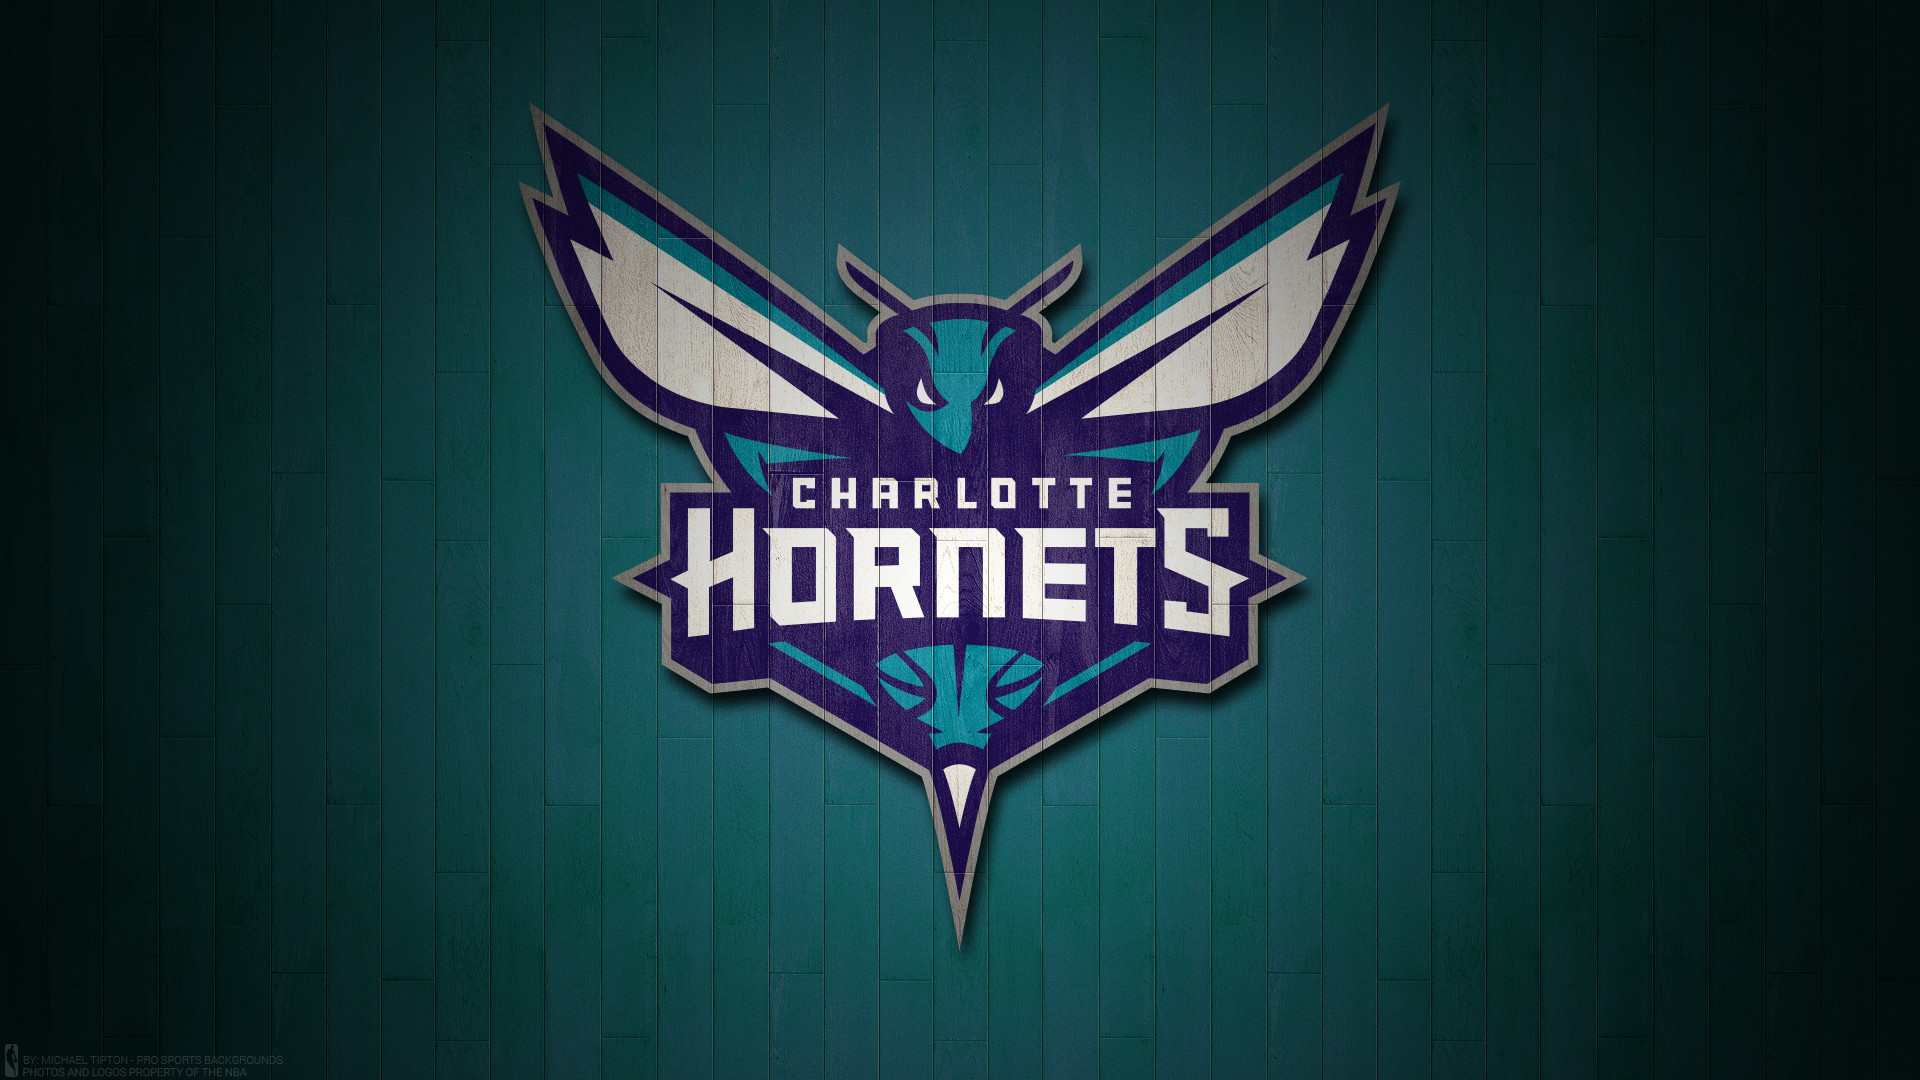 1920x1080 ... Charlotte Hornets 2017 nba basketball logo wallpaper pc desktop computer